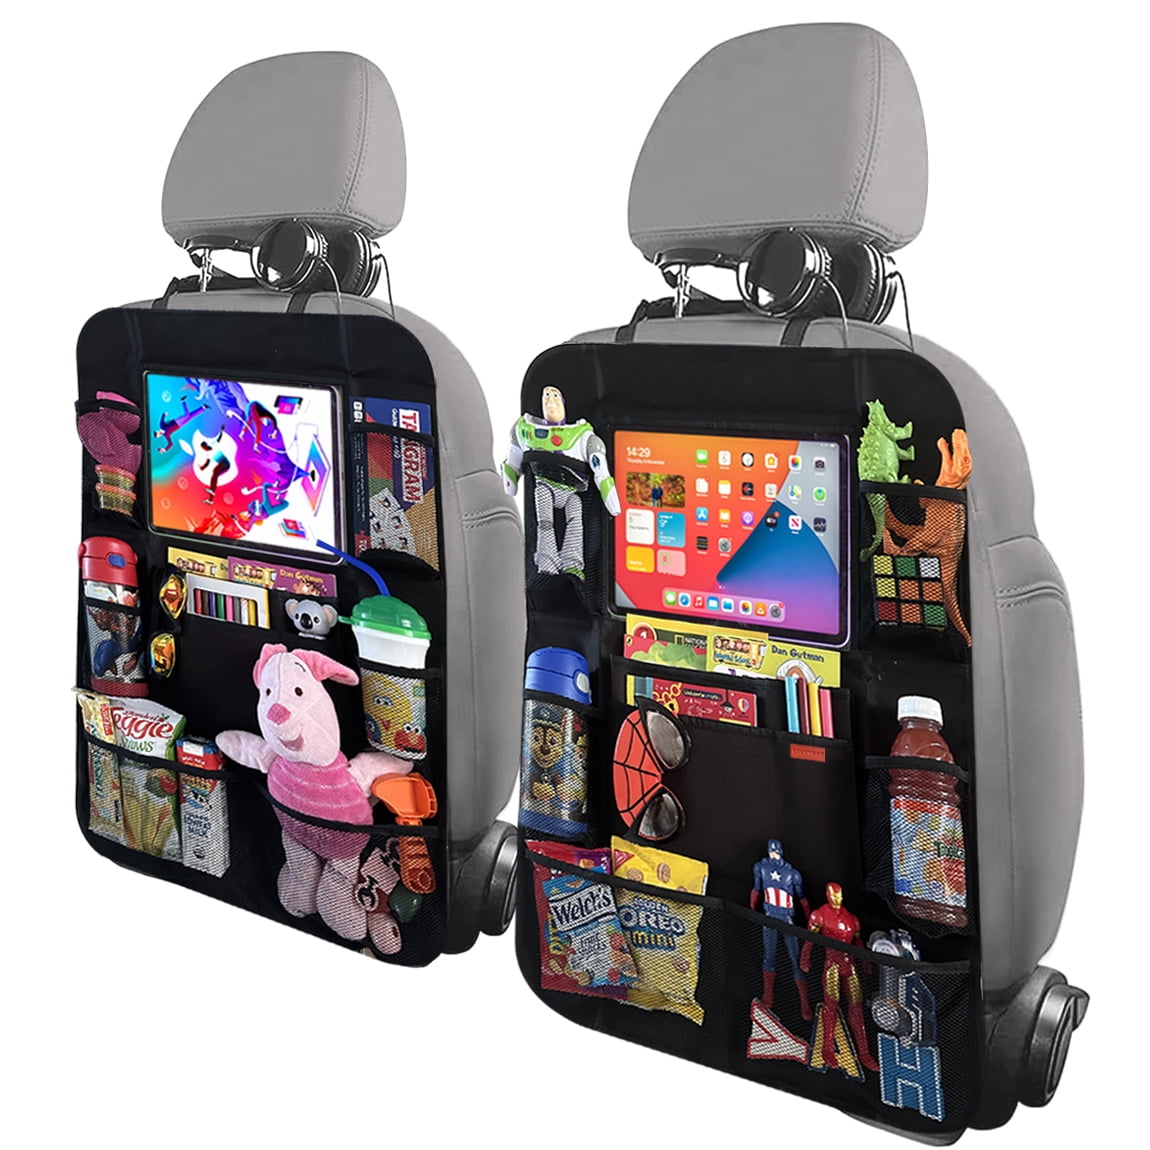 Car Organizing Seat Saver Backrest Storage Bag - NinjaNew